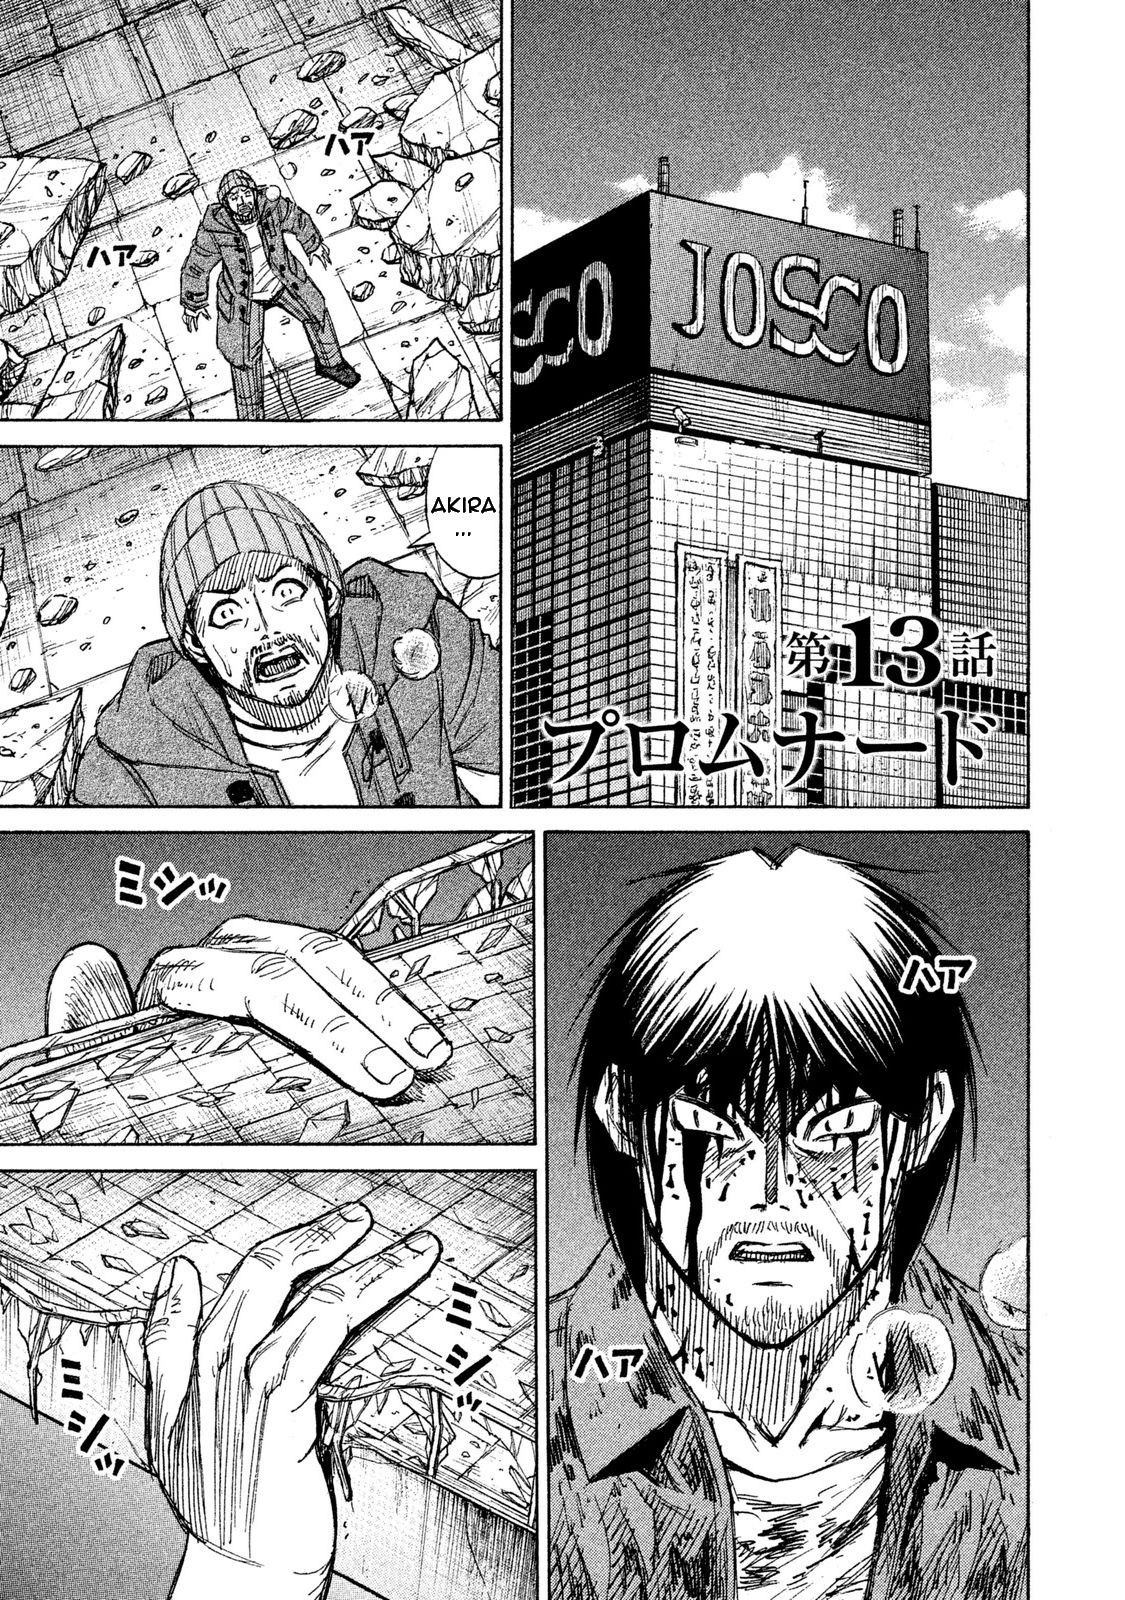 Higanjima - 48 Days Later - Page 1